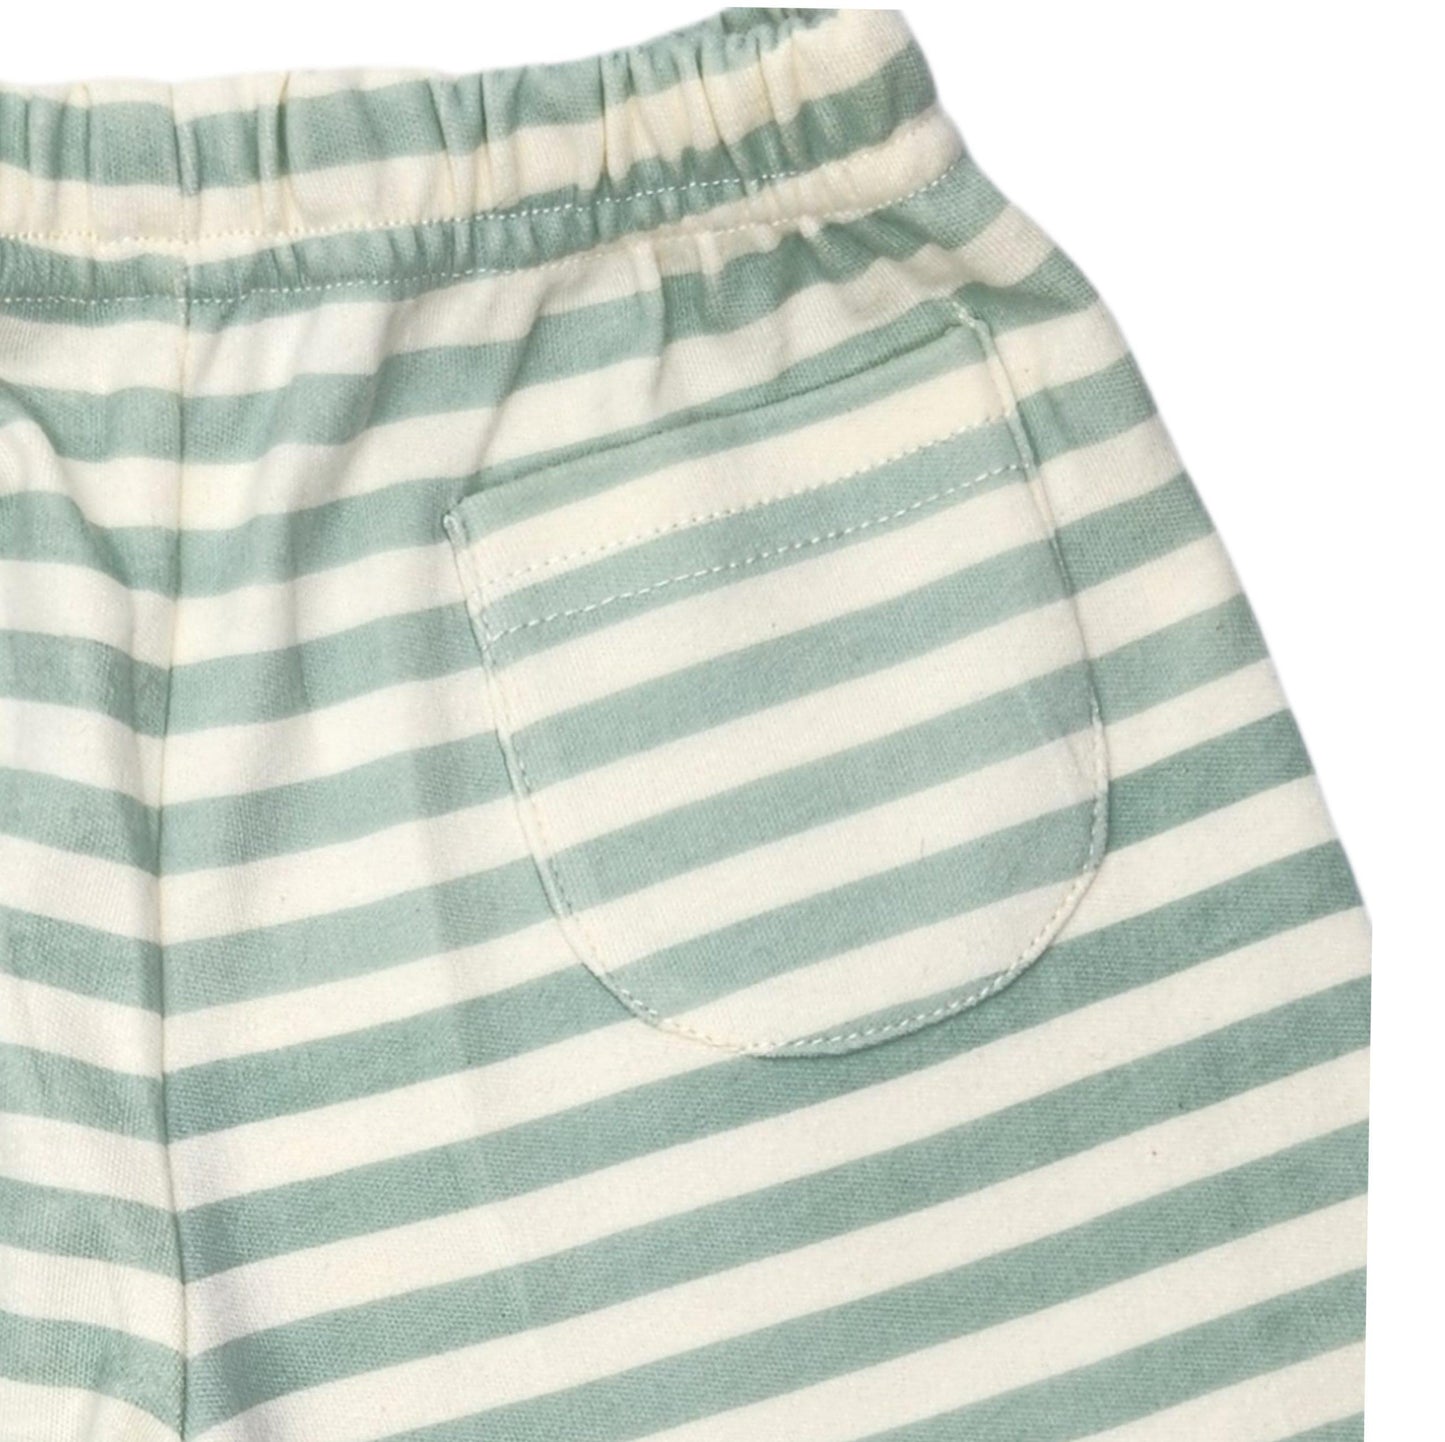 Sage Stripes Baby Lounge Pants